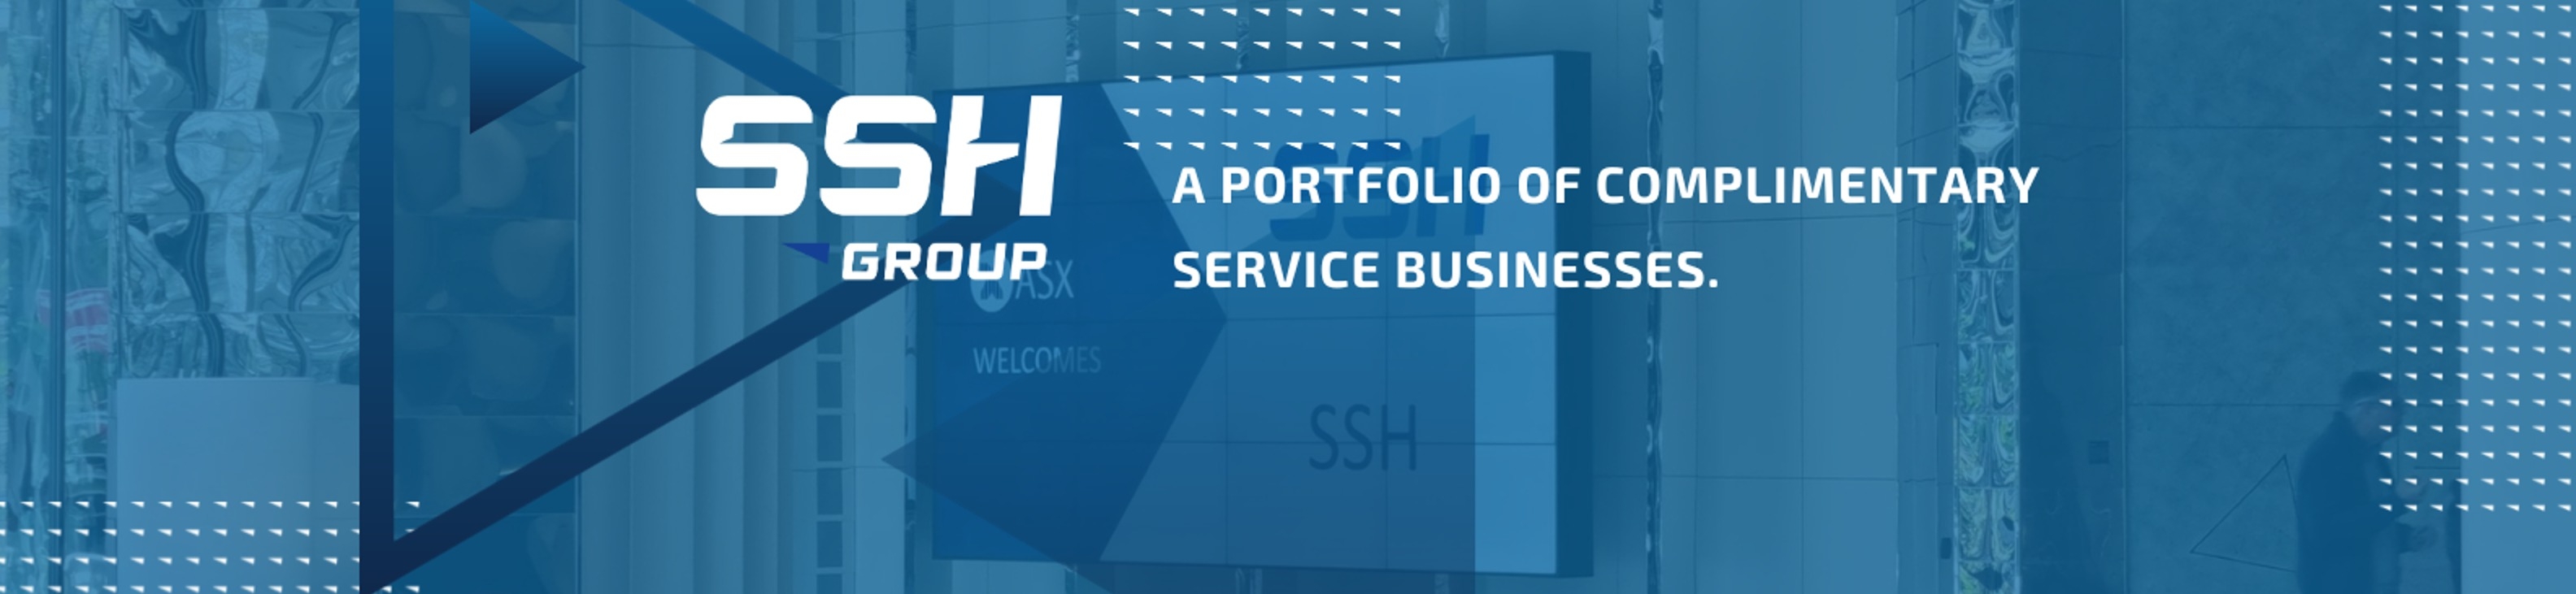 SSH Group Ltd investor hub background image